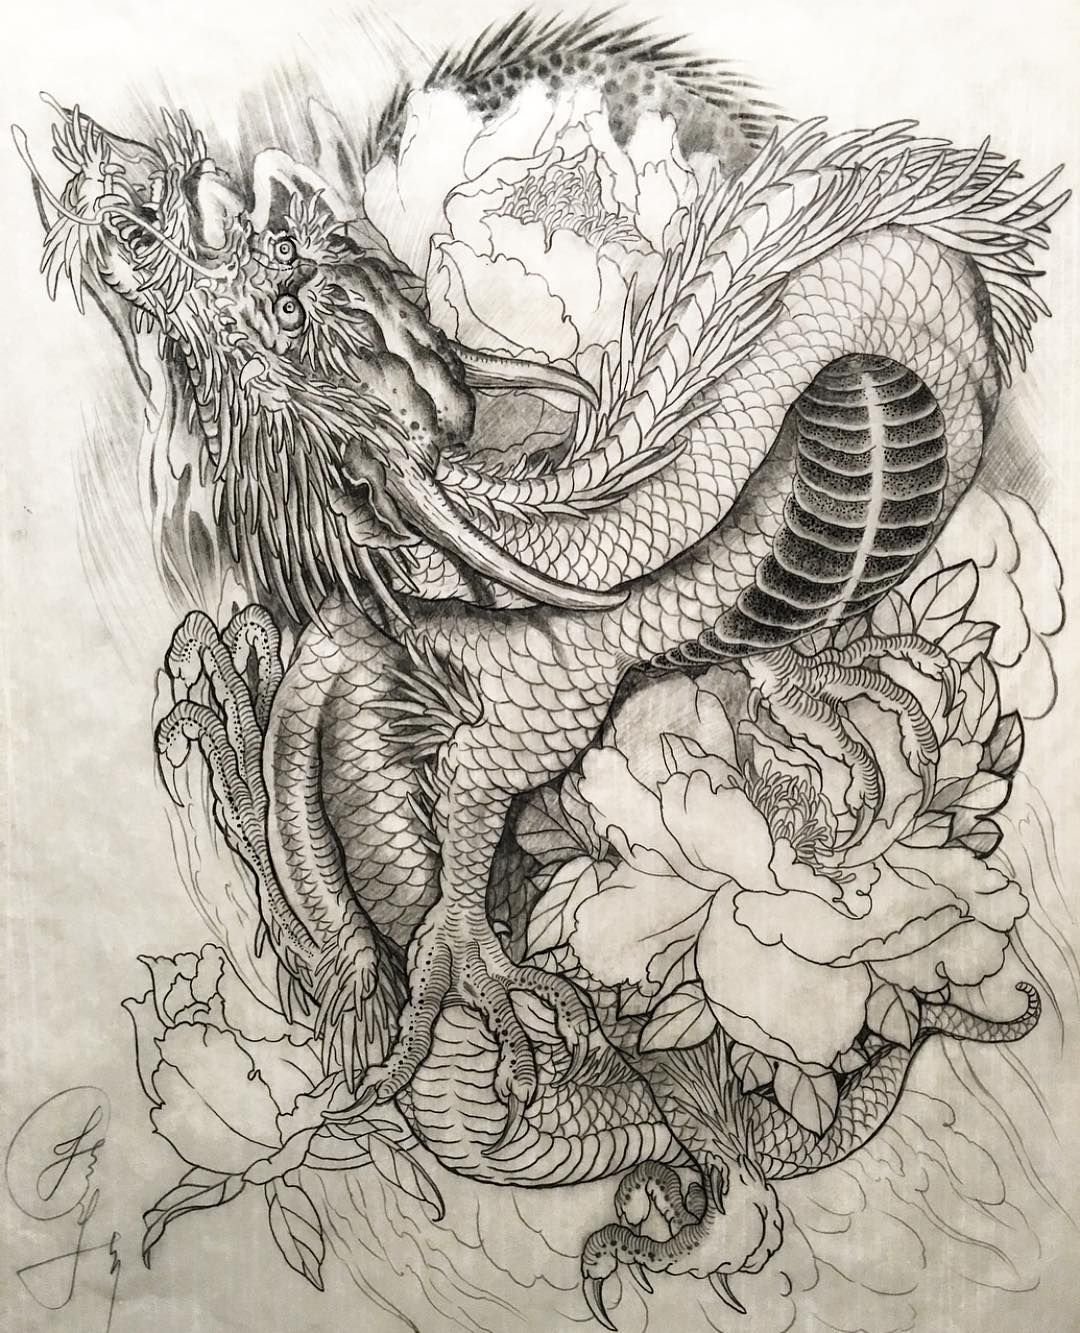 Dragon graphics. Ориентал тату эскизы дракон. Дракон тату эскиз. Японский дракон тату эскизы. Дракон в стиле Графика.